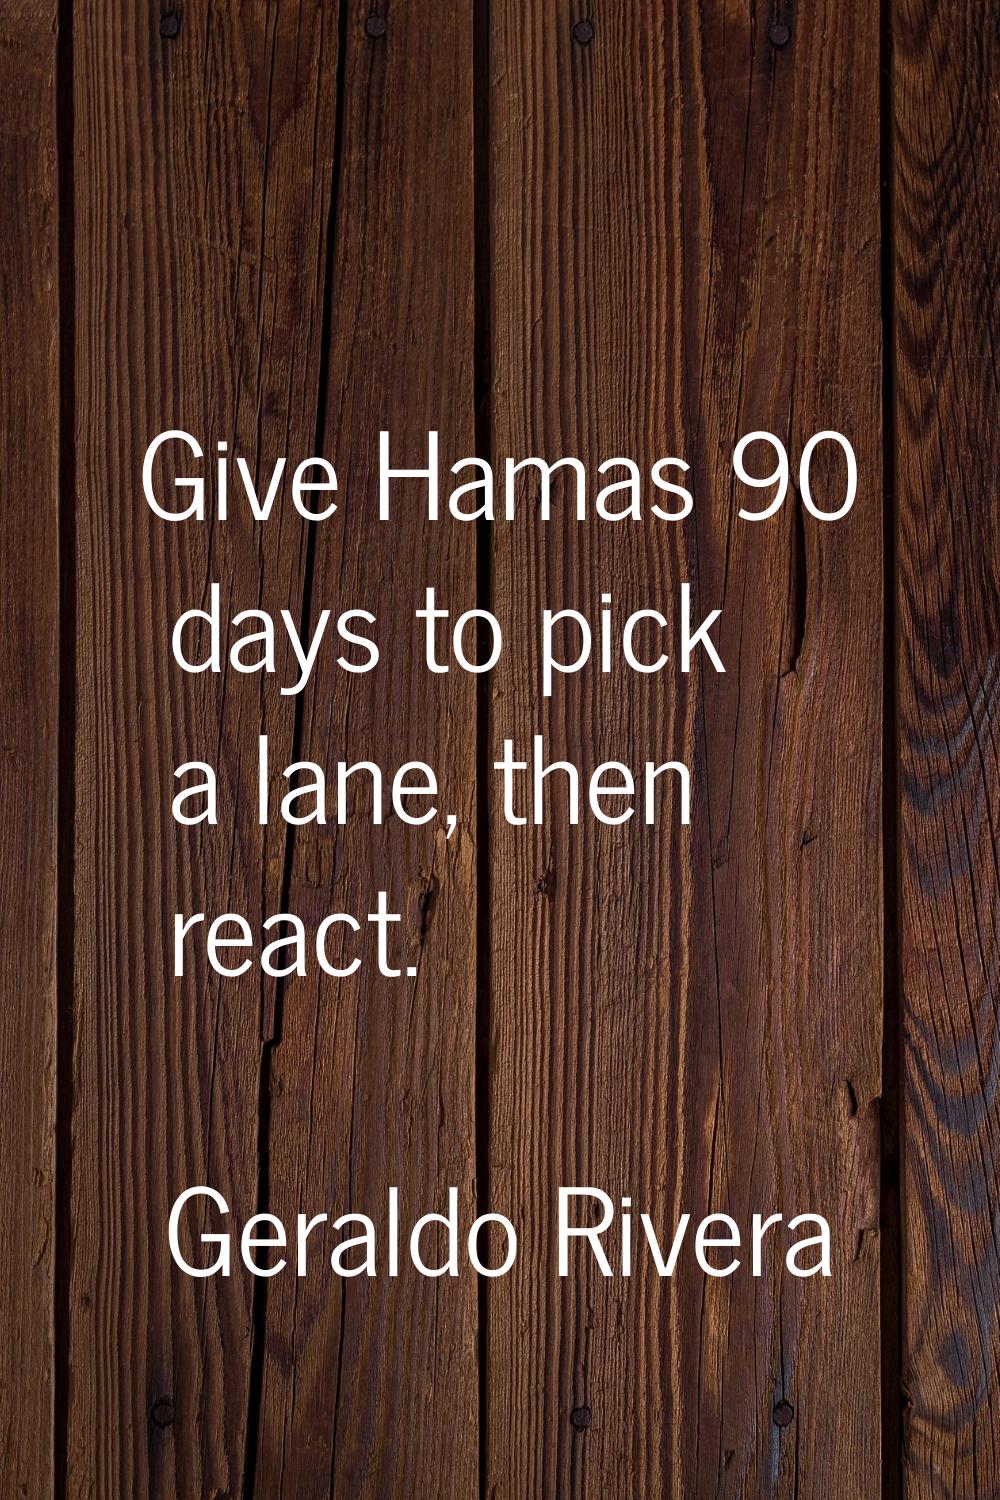 Give Hamas 90 days to pick a lane, then react.